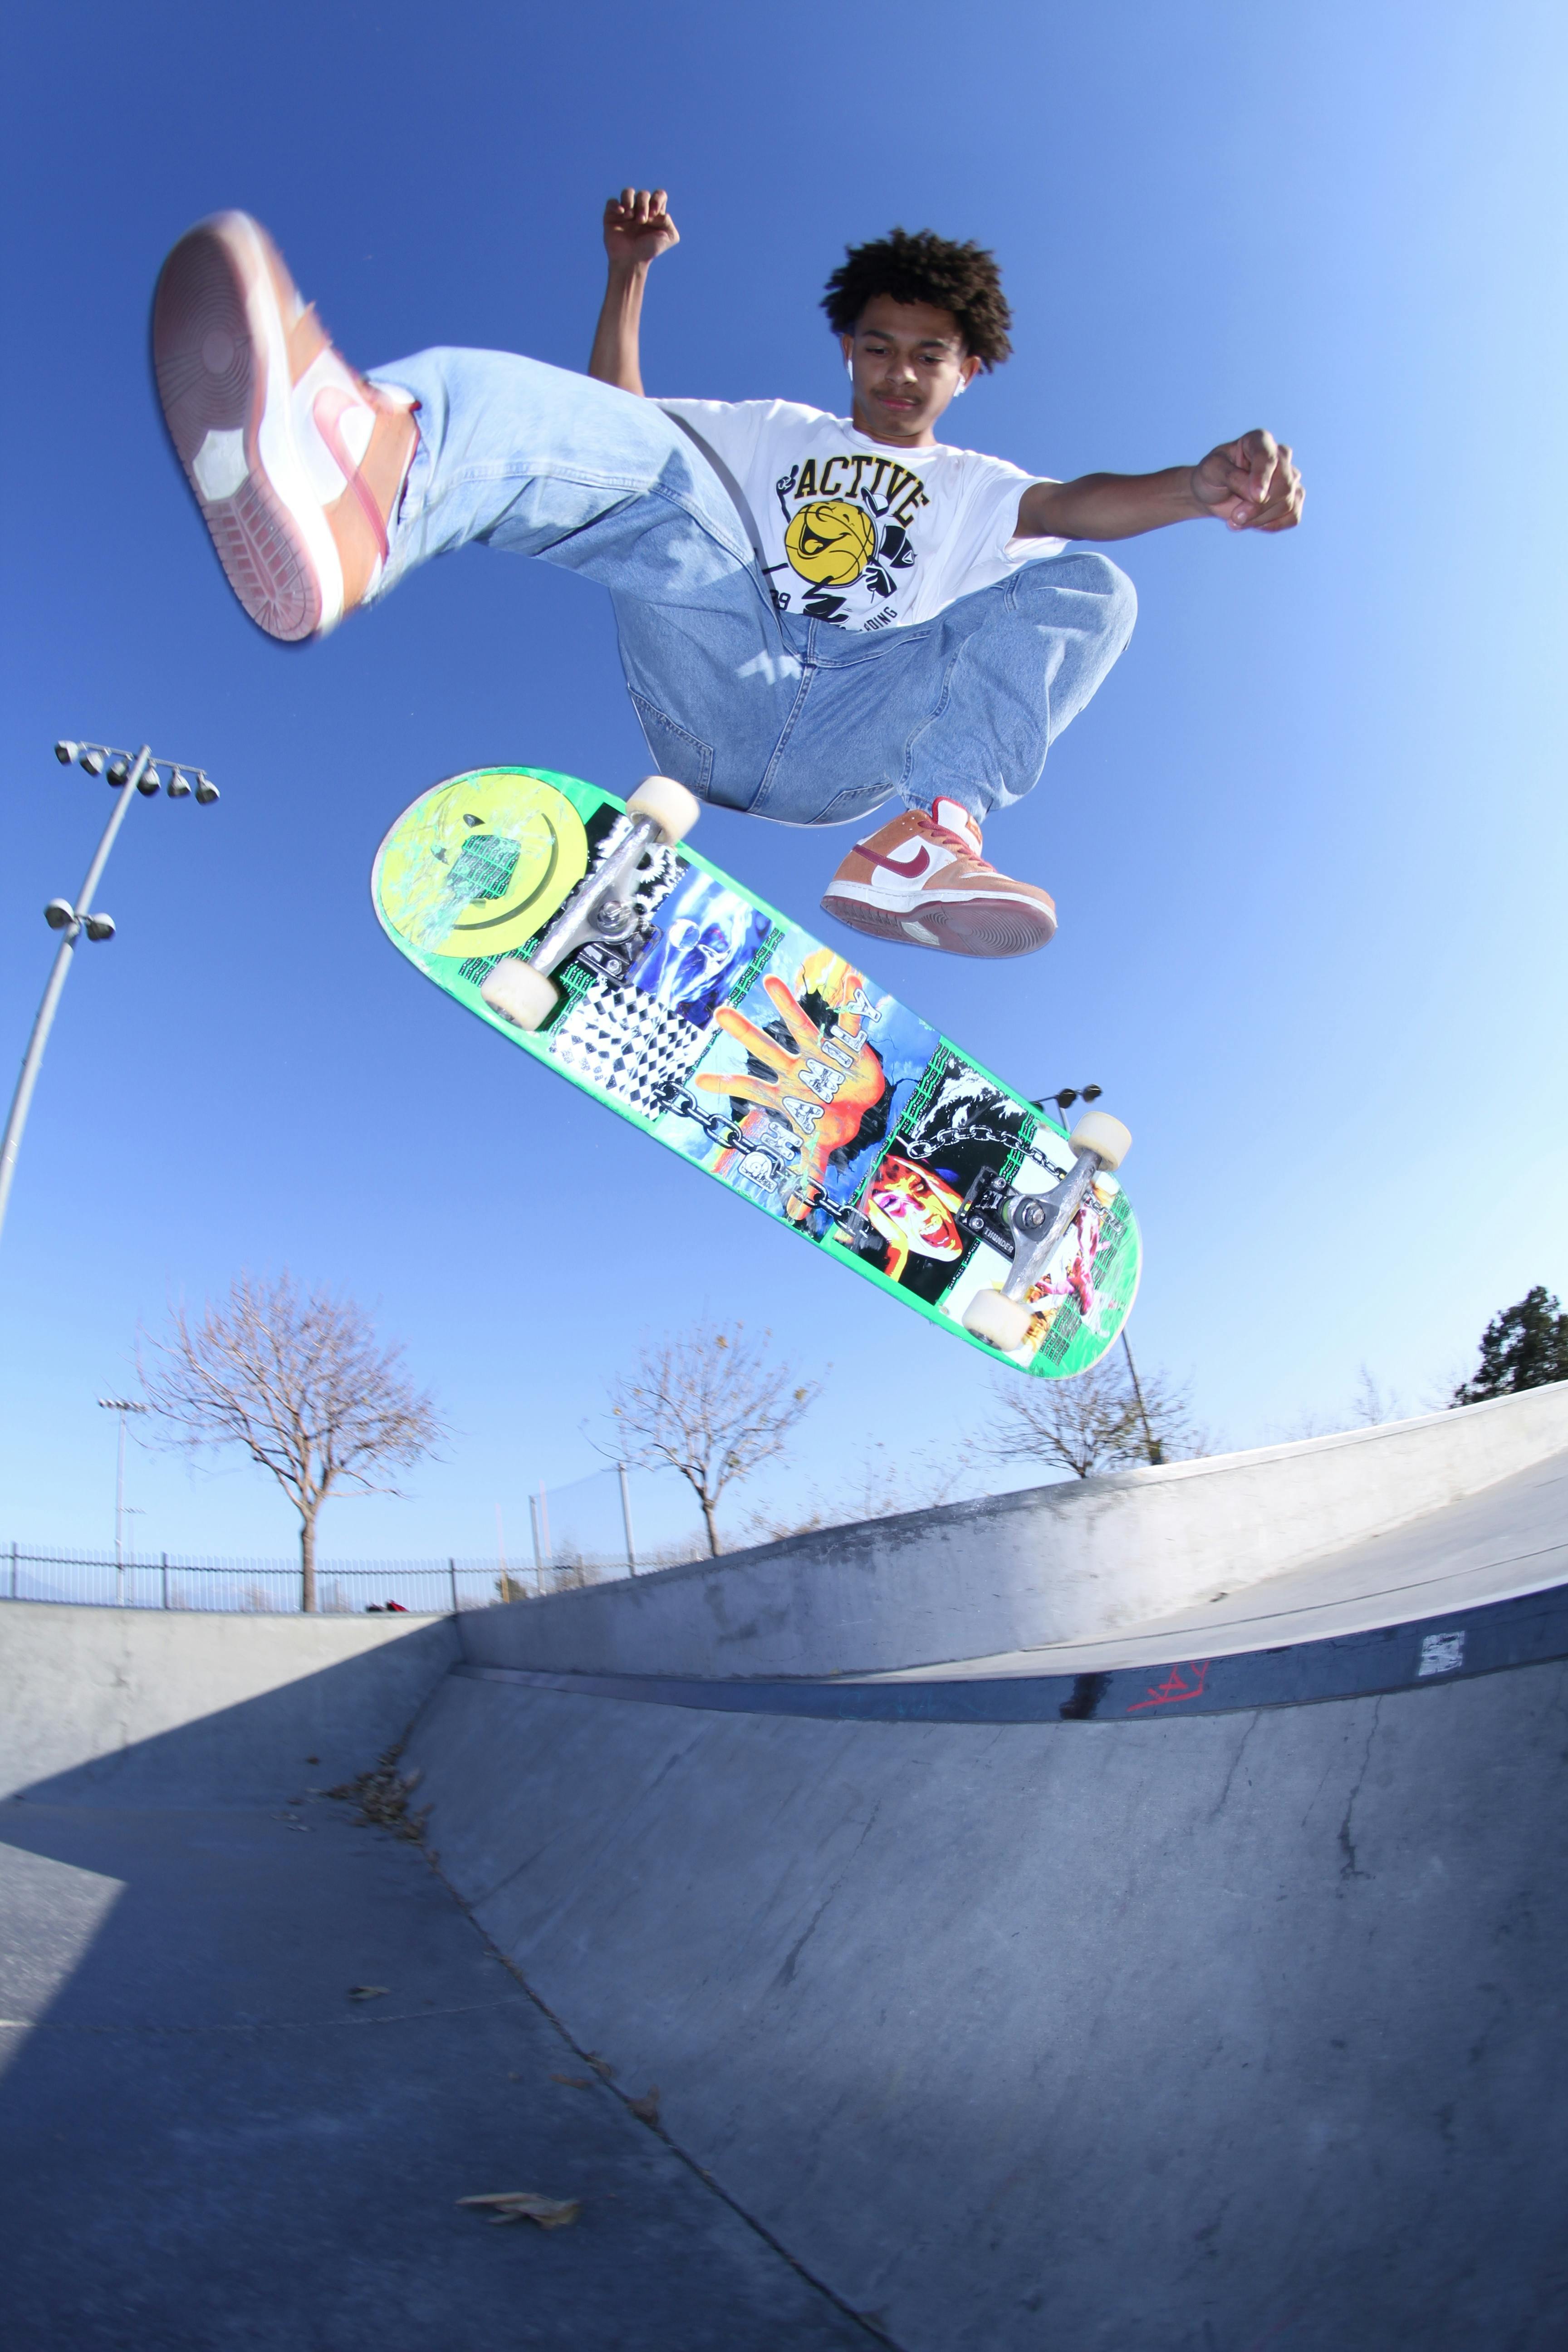 levering aan huis Premisse dinsdag Cool black teenager doing skateboard trick · Free Stock Photo